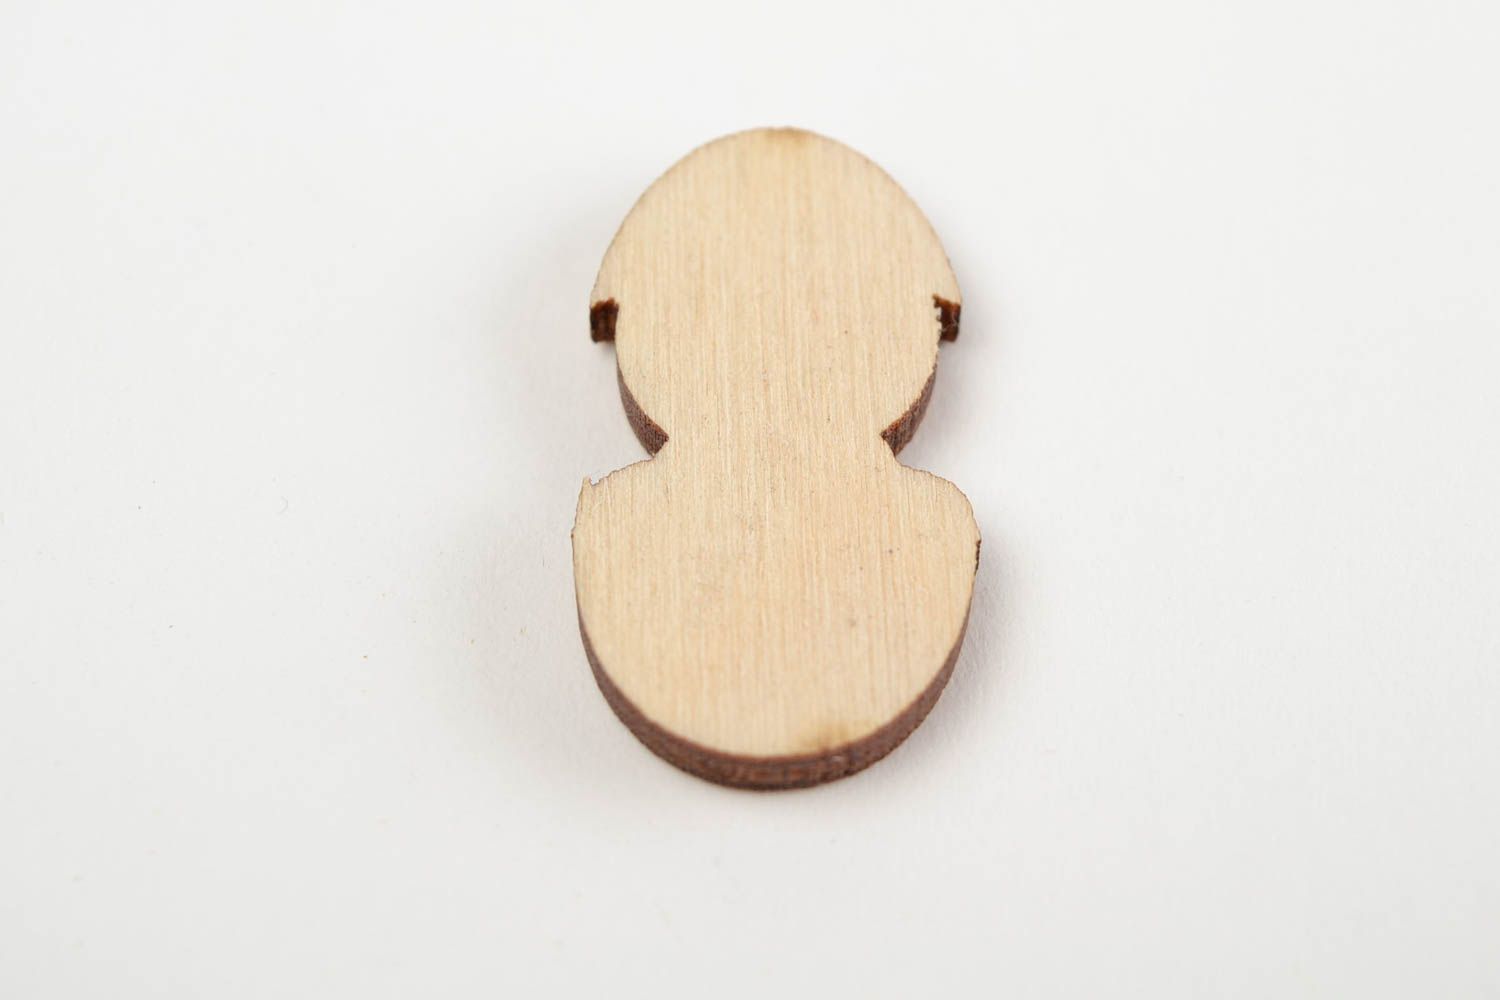 Handmade designer wooden blank unusual goods for creativity art supplies photo 5